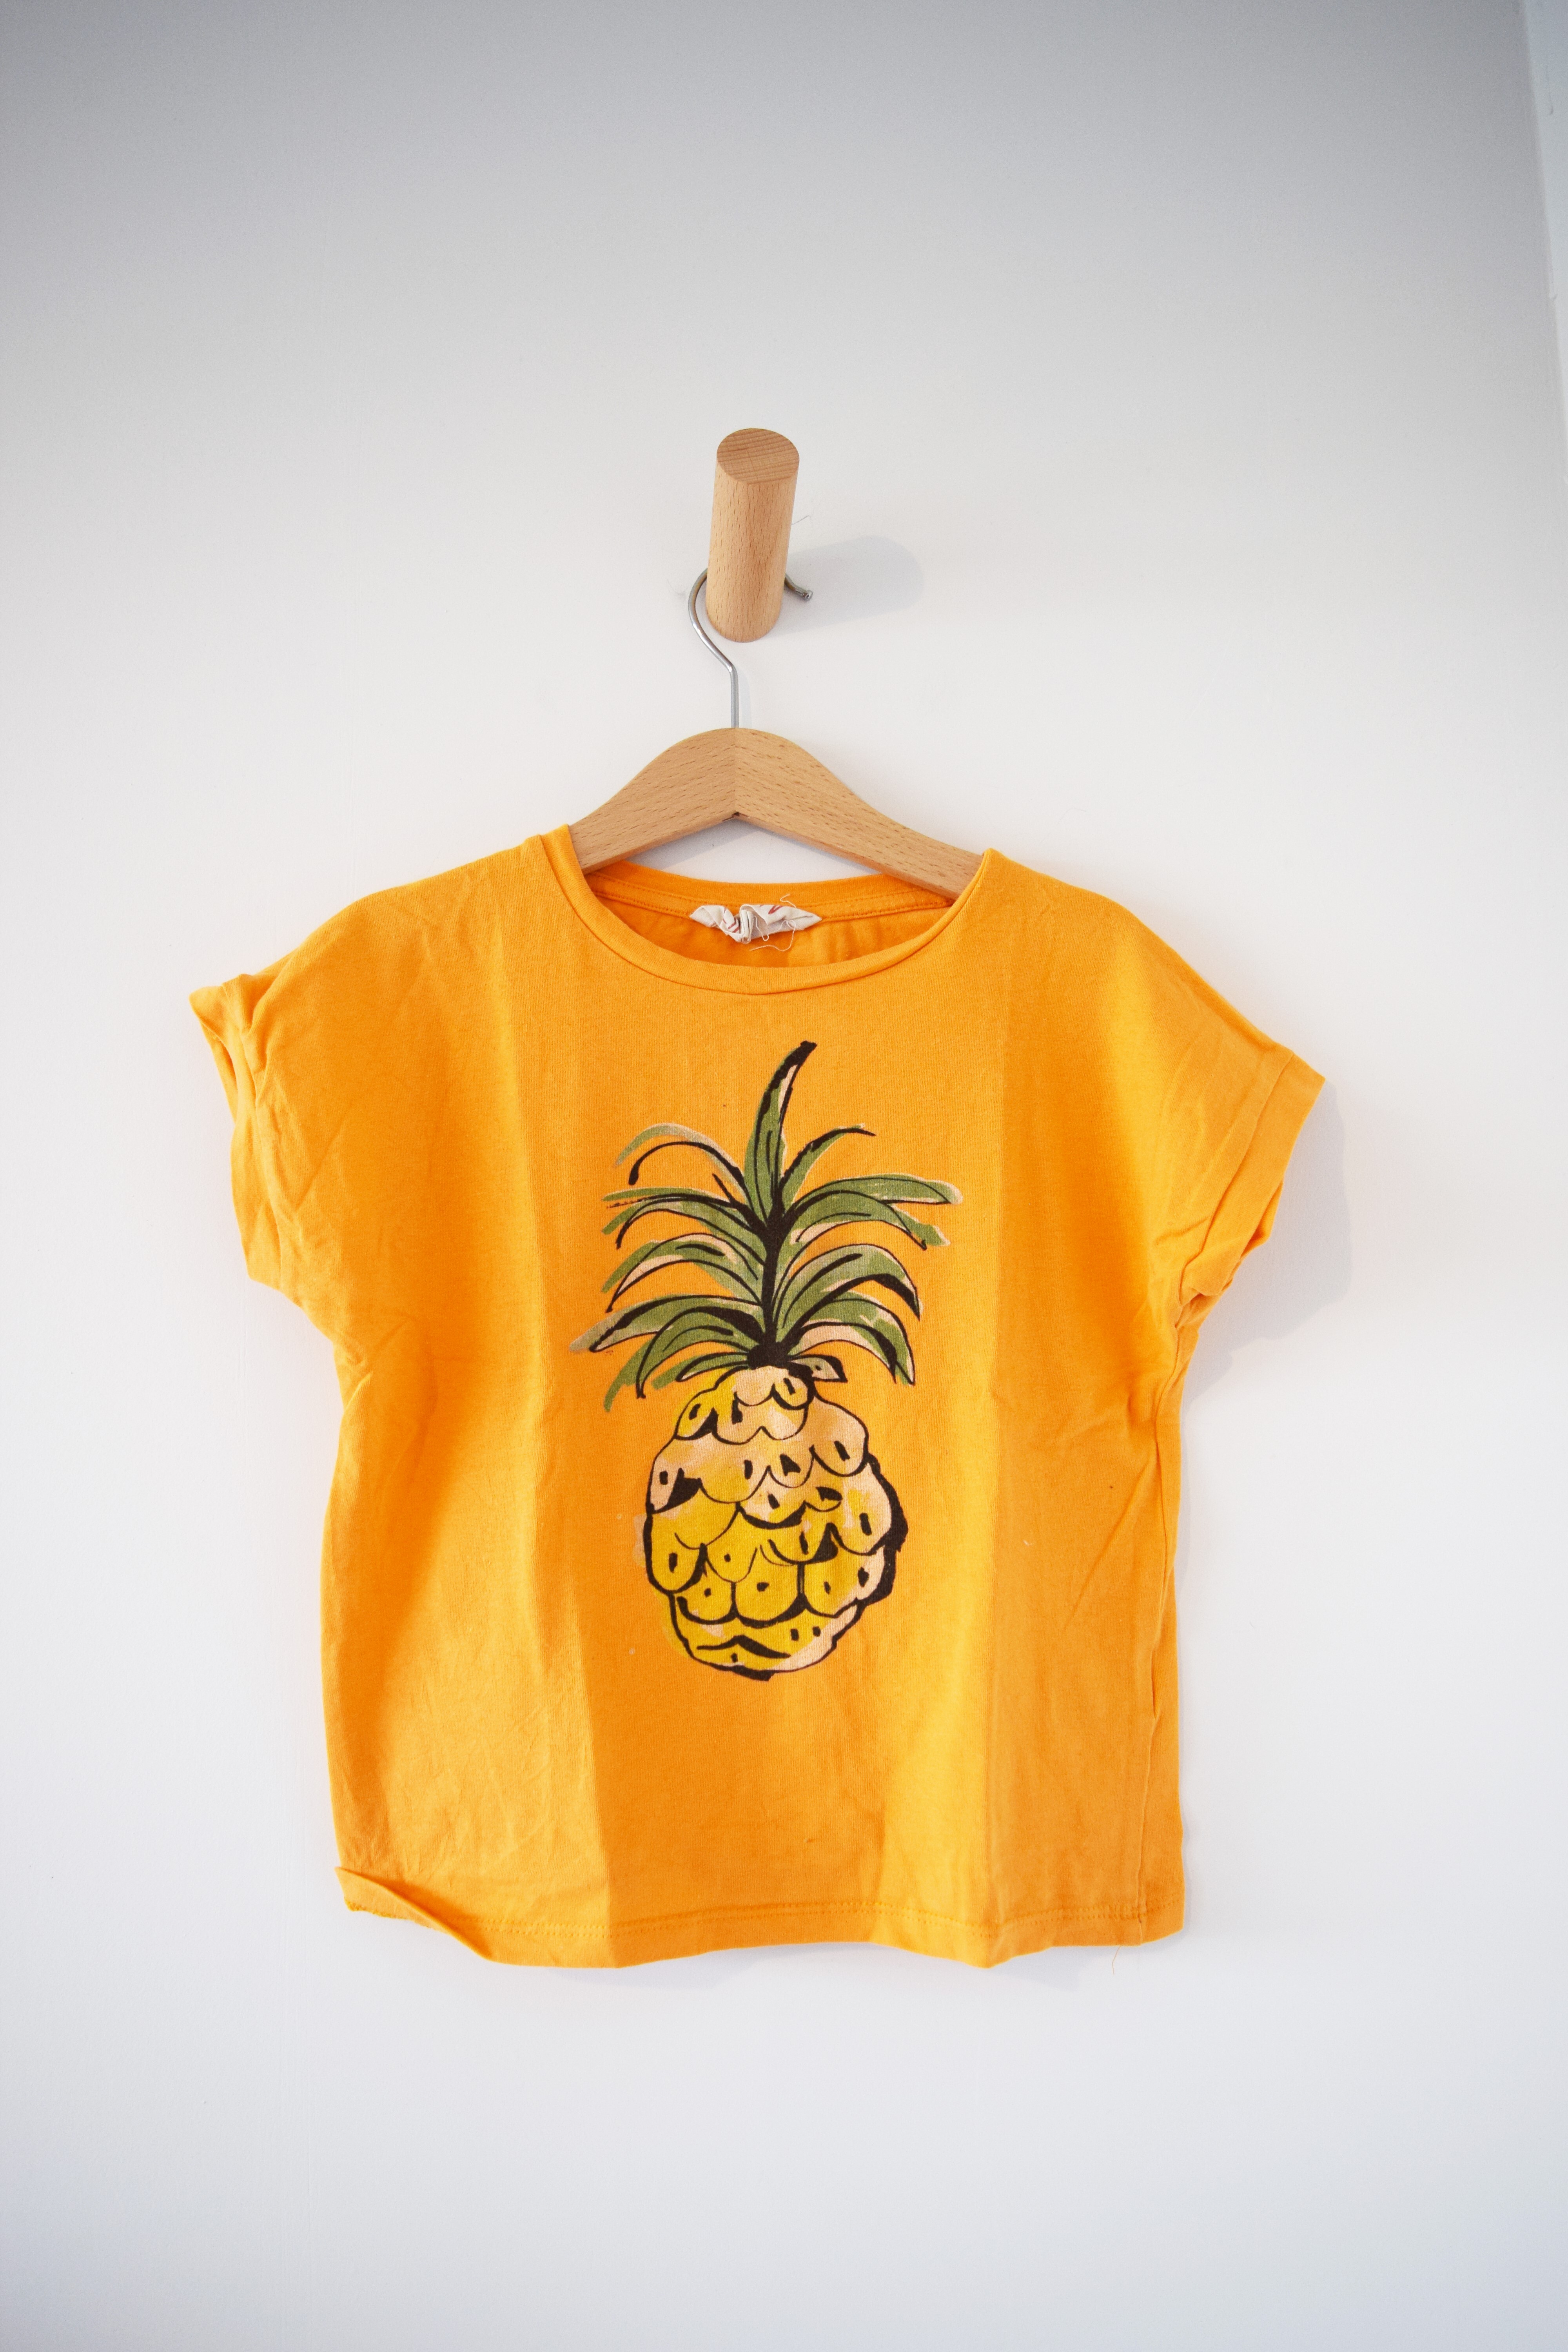 T-shirt, Limon, 128 